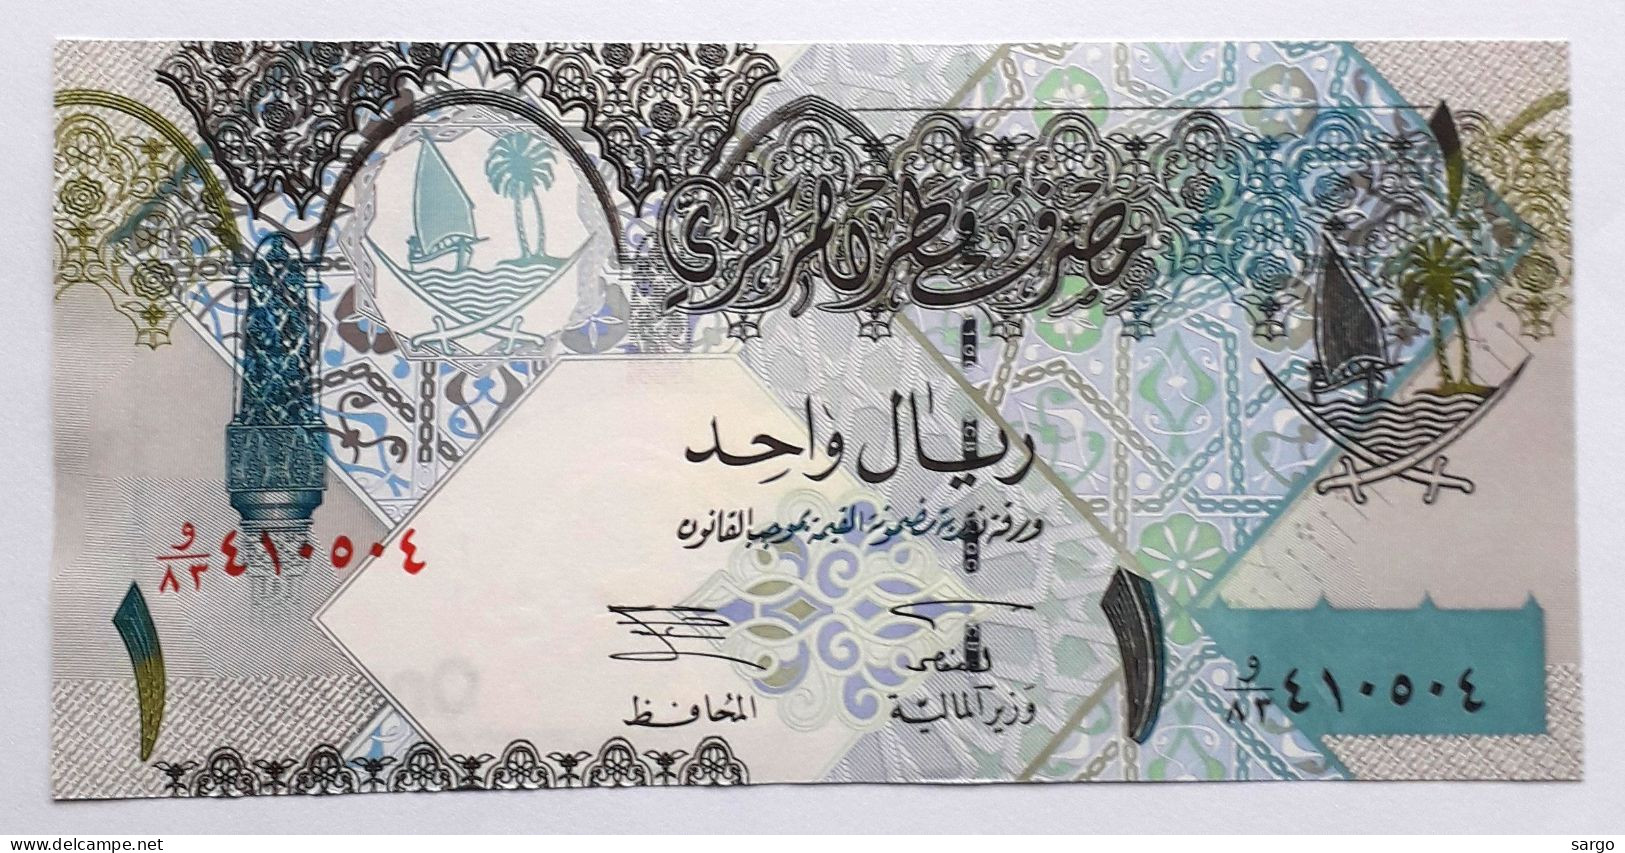 QATAR  - 1 RYAL  - 2003  - UNC - P 20 - BANKNOTES - PAPER MONEY - CARTAMONETA - - Qatar